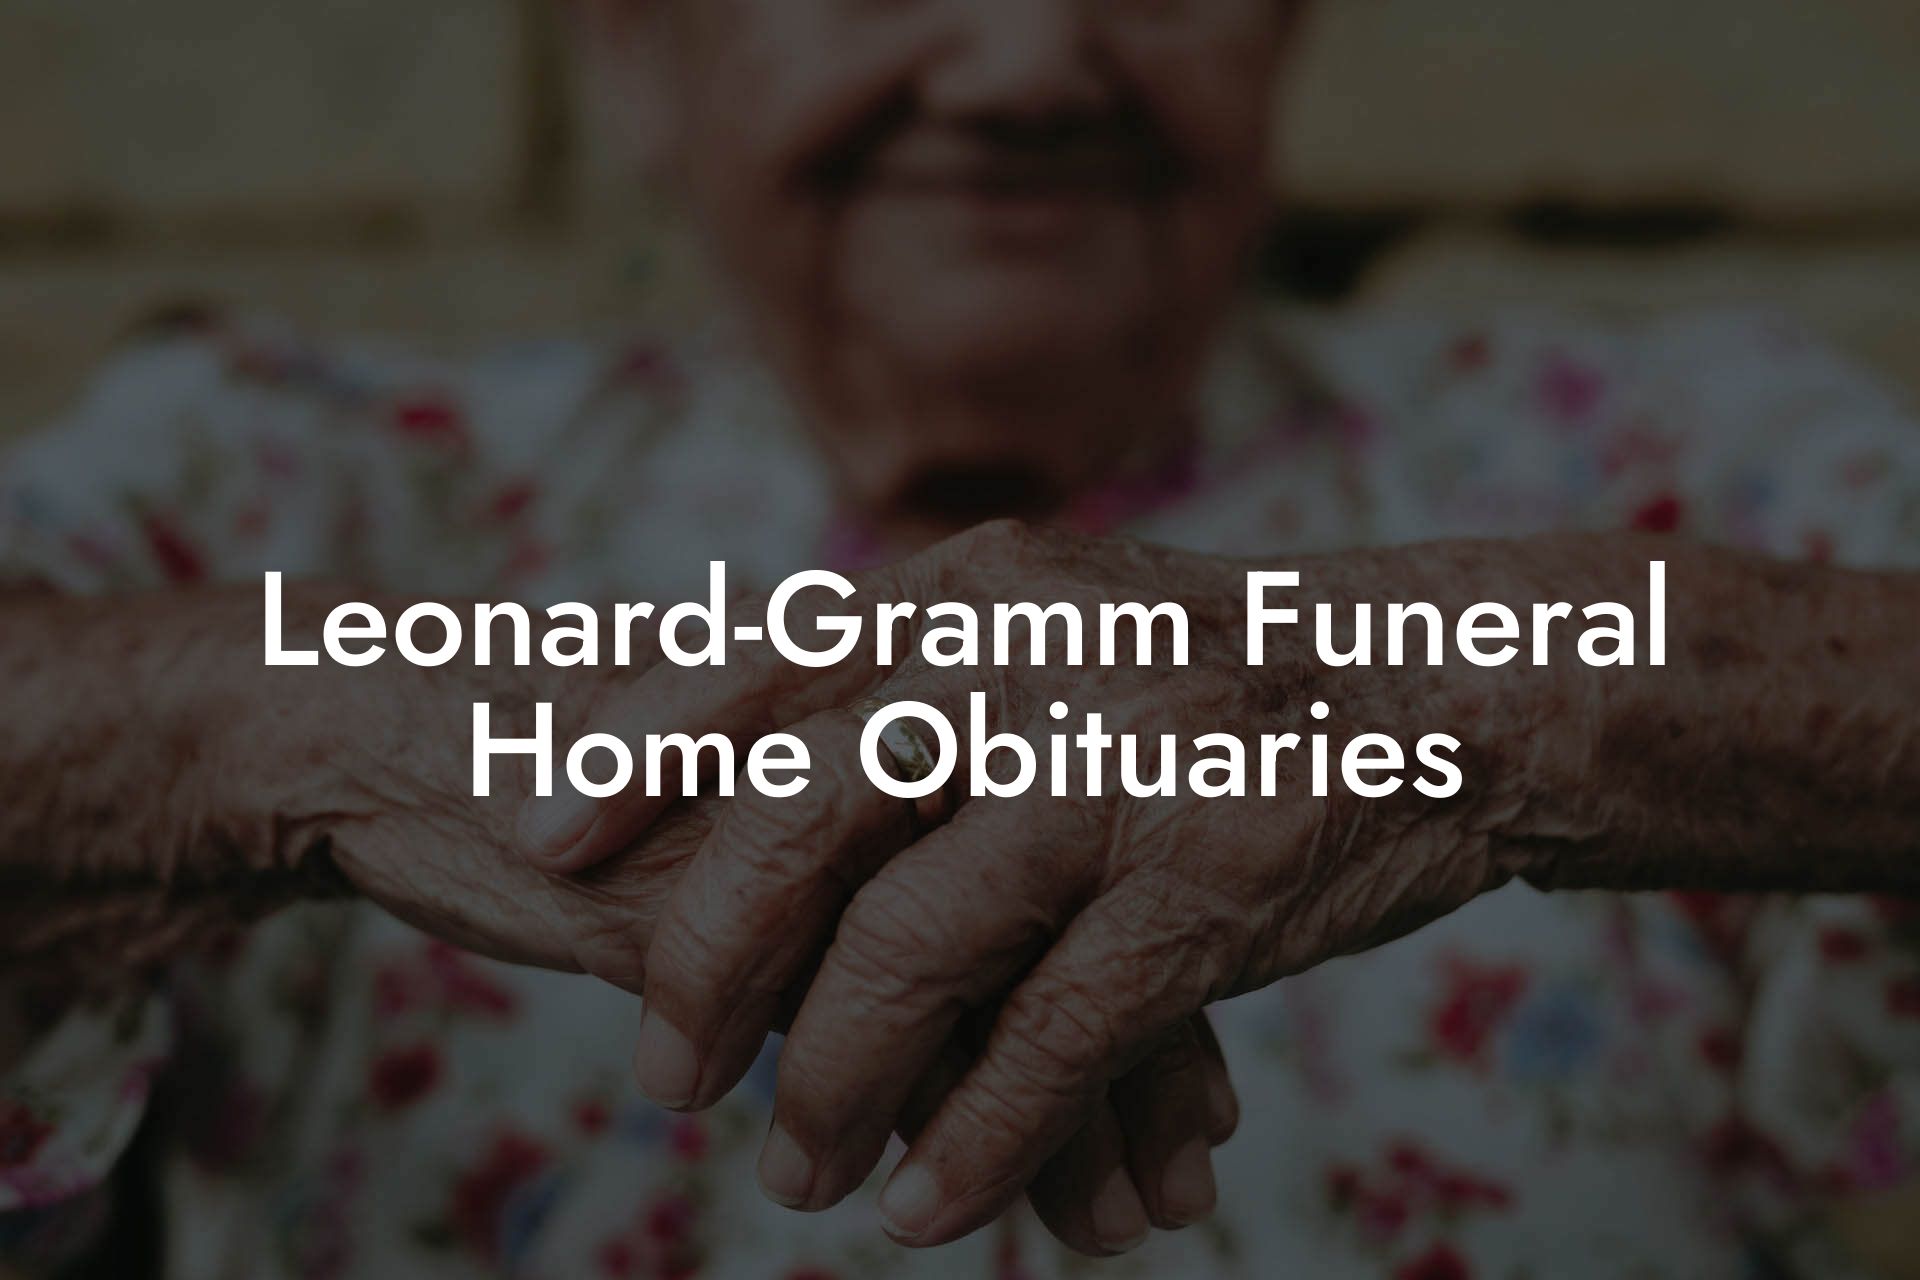 Leonard-Gramm Funeral Home Obituaries